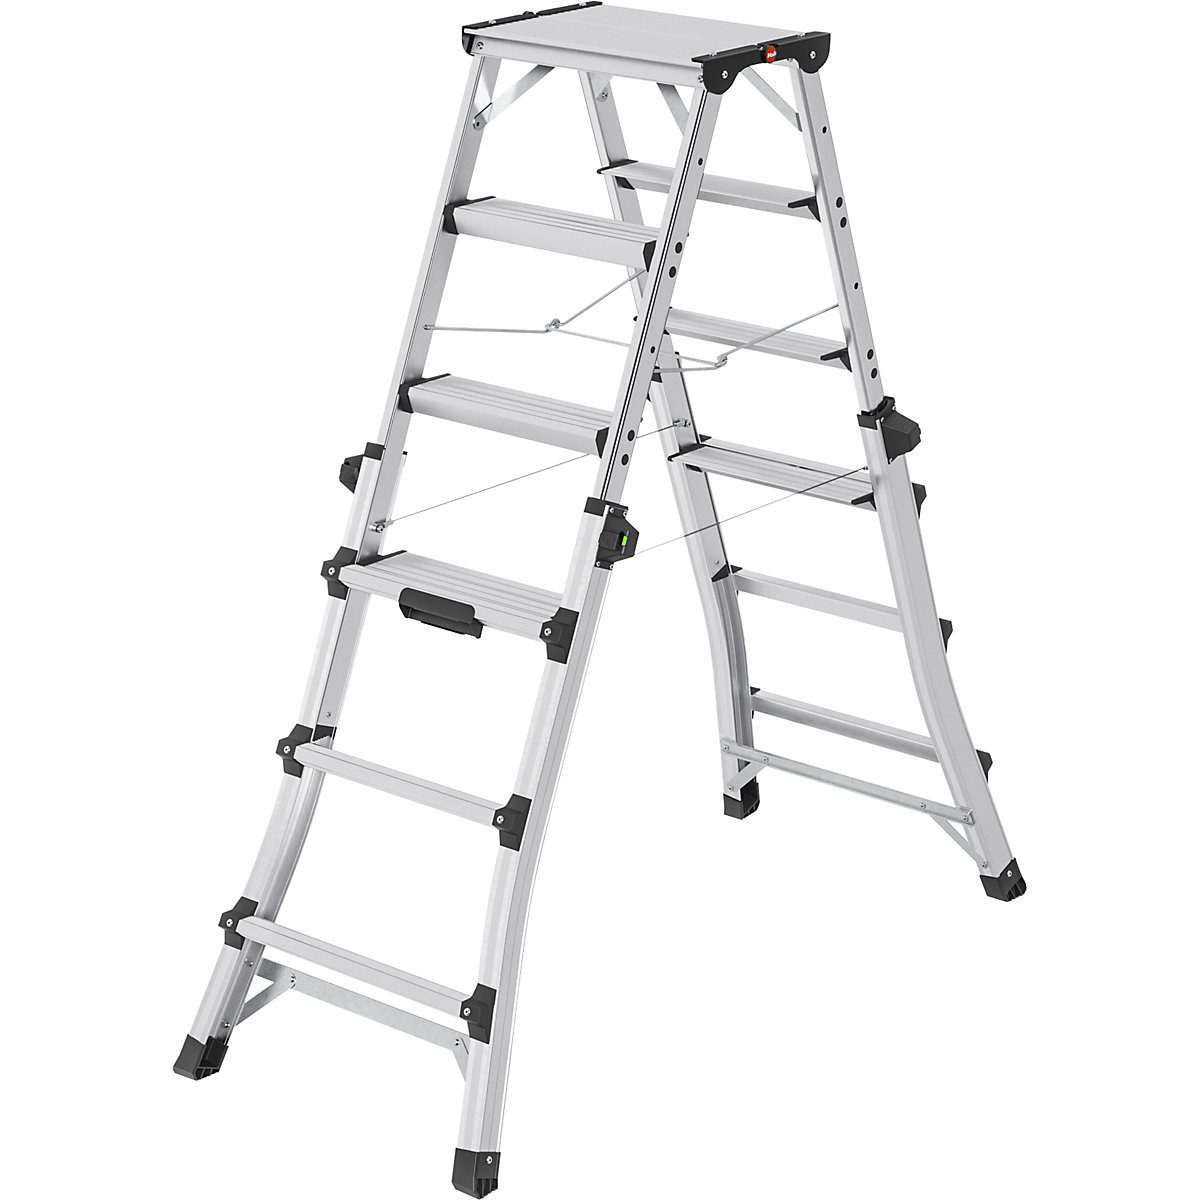 D100 TL telescopic folding ladder - Hailo